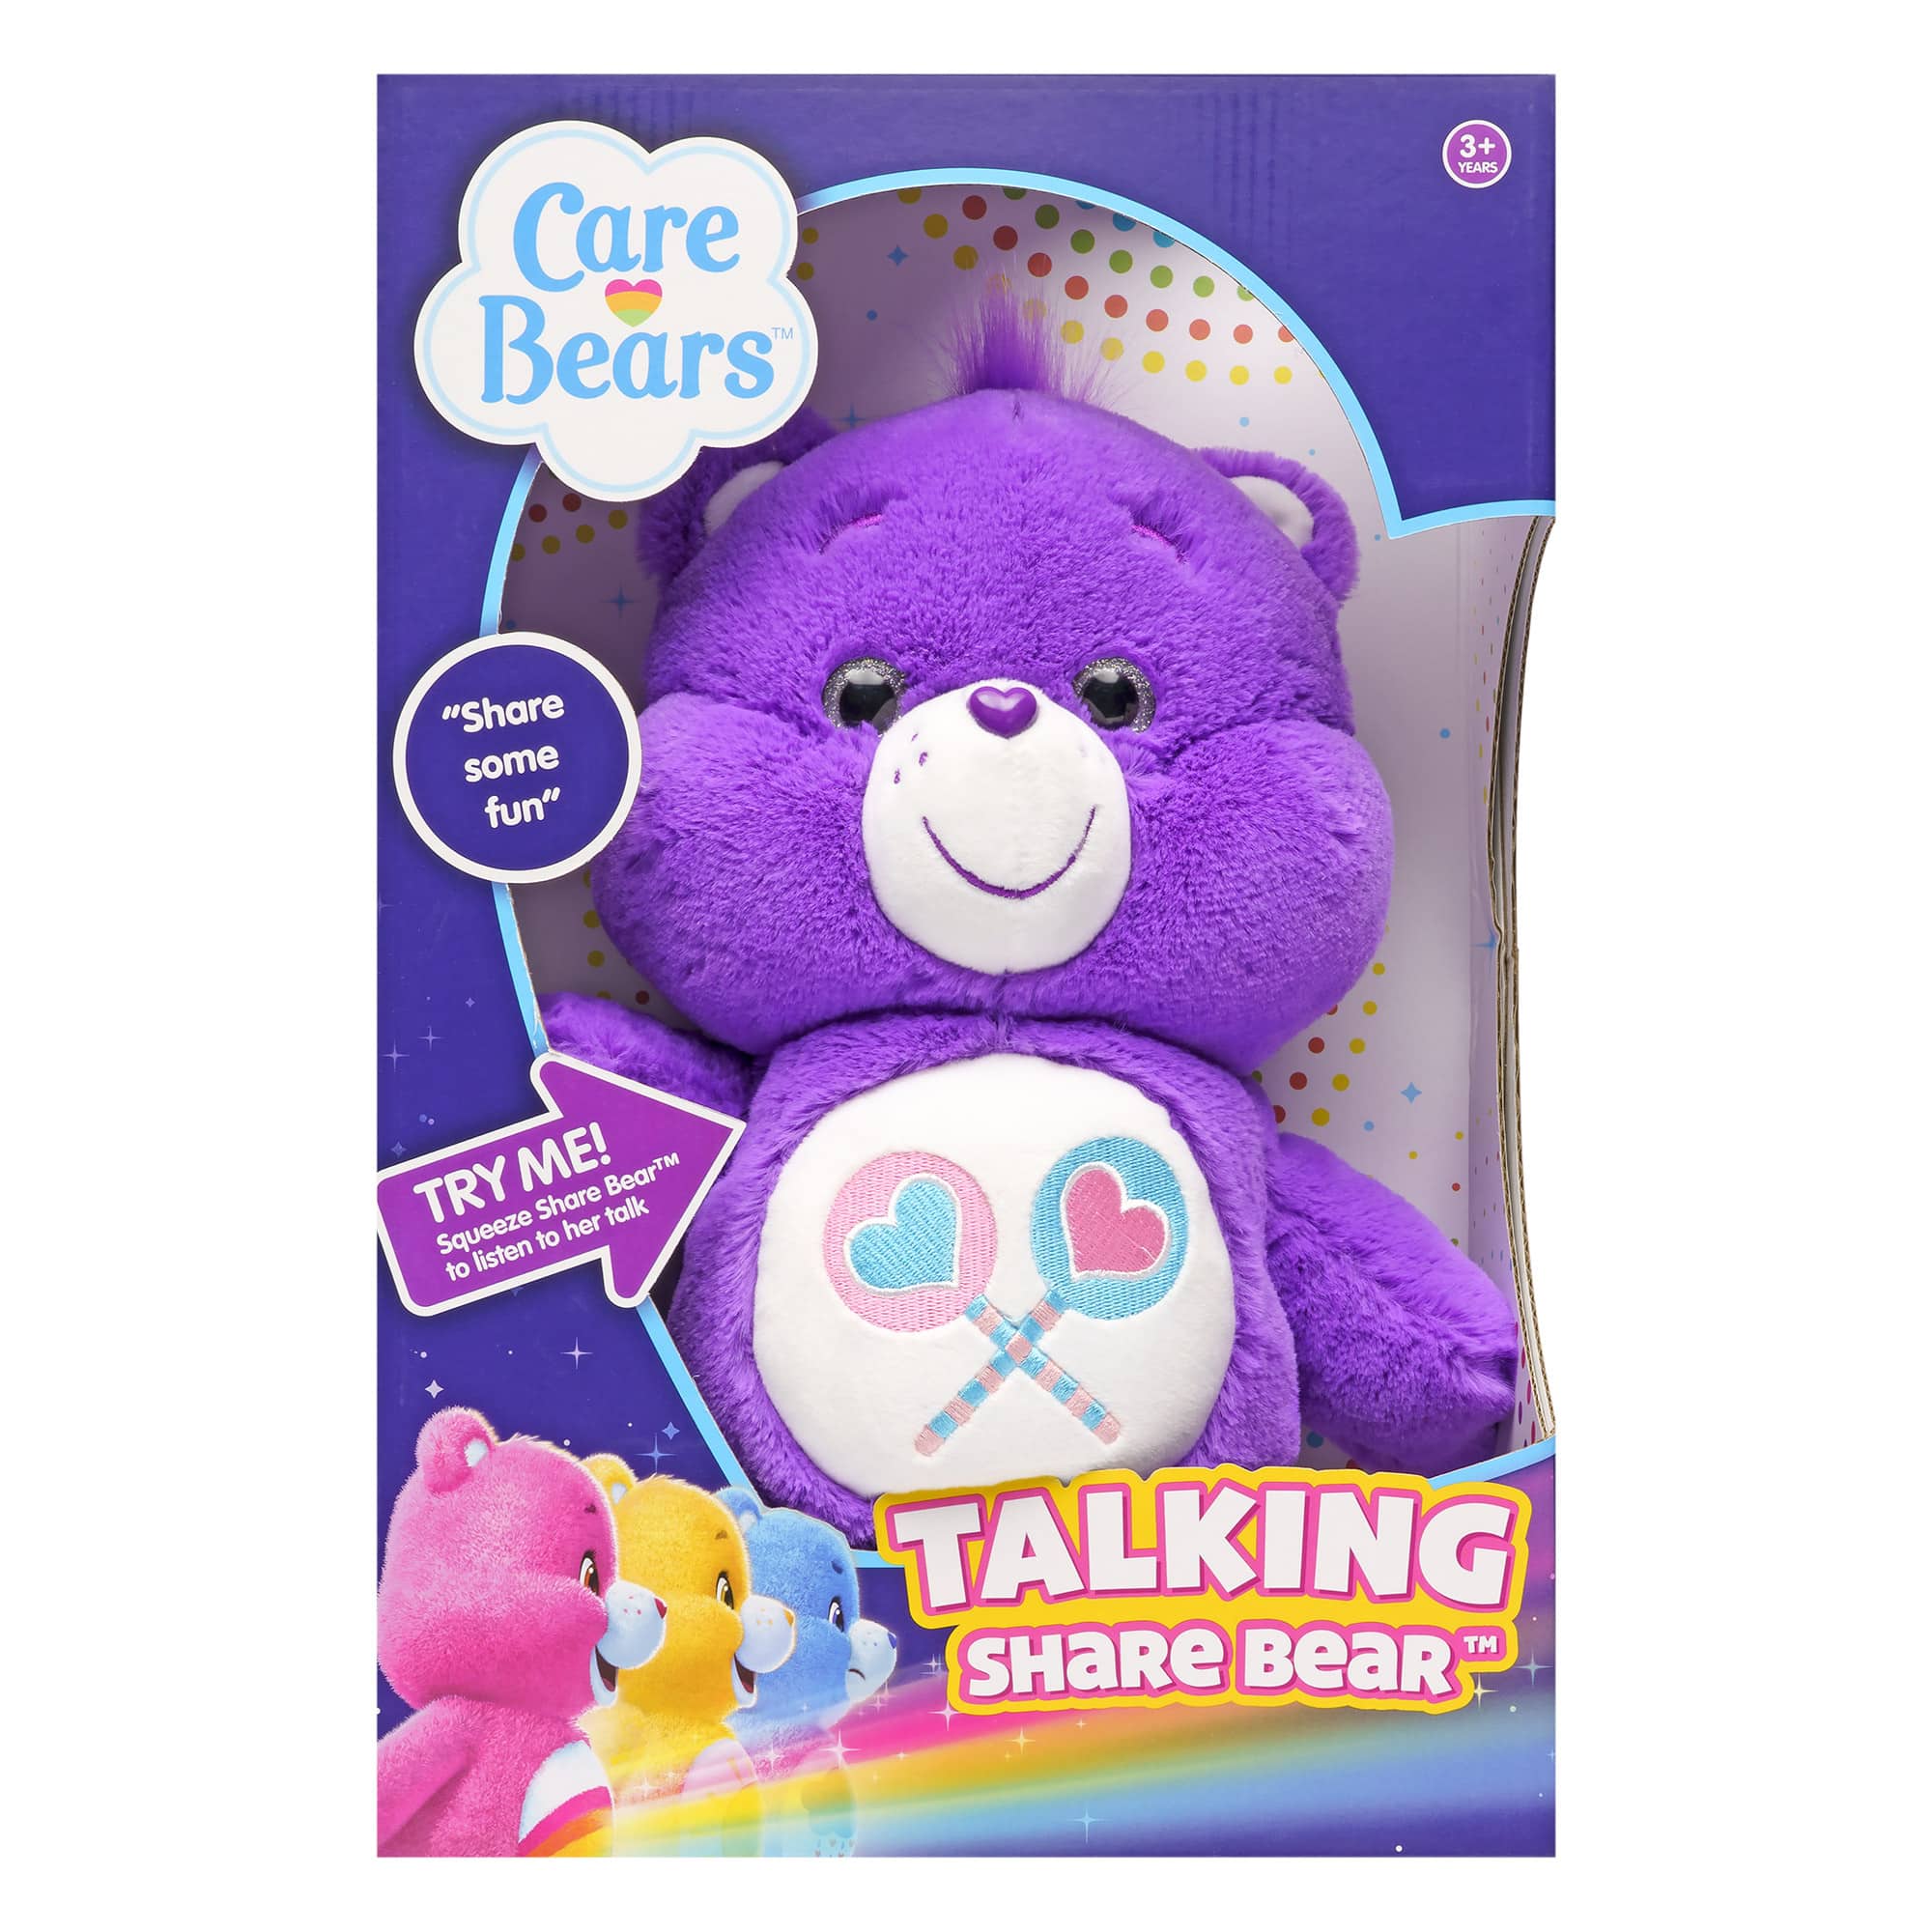 Care Bears - Talking Share Bear Plush